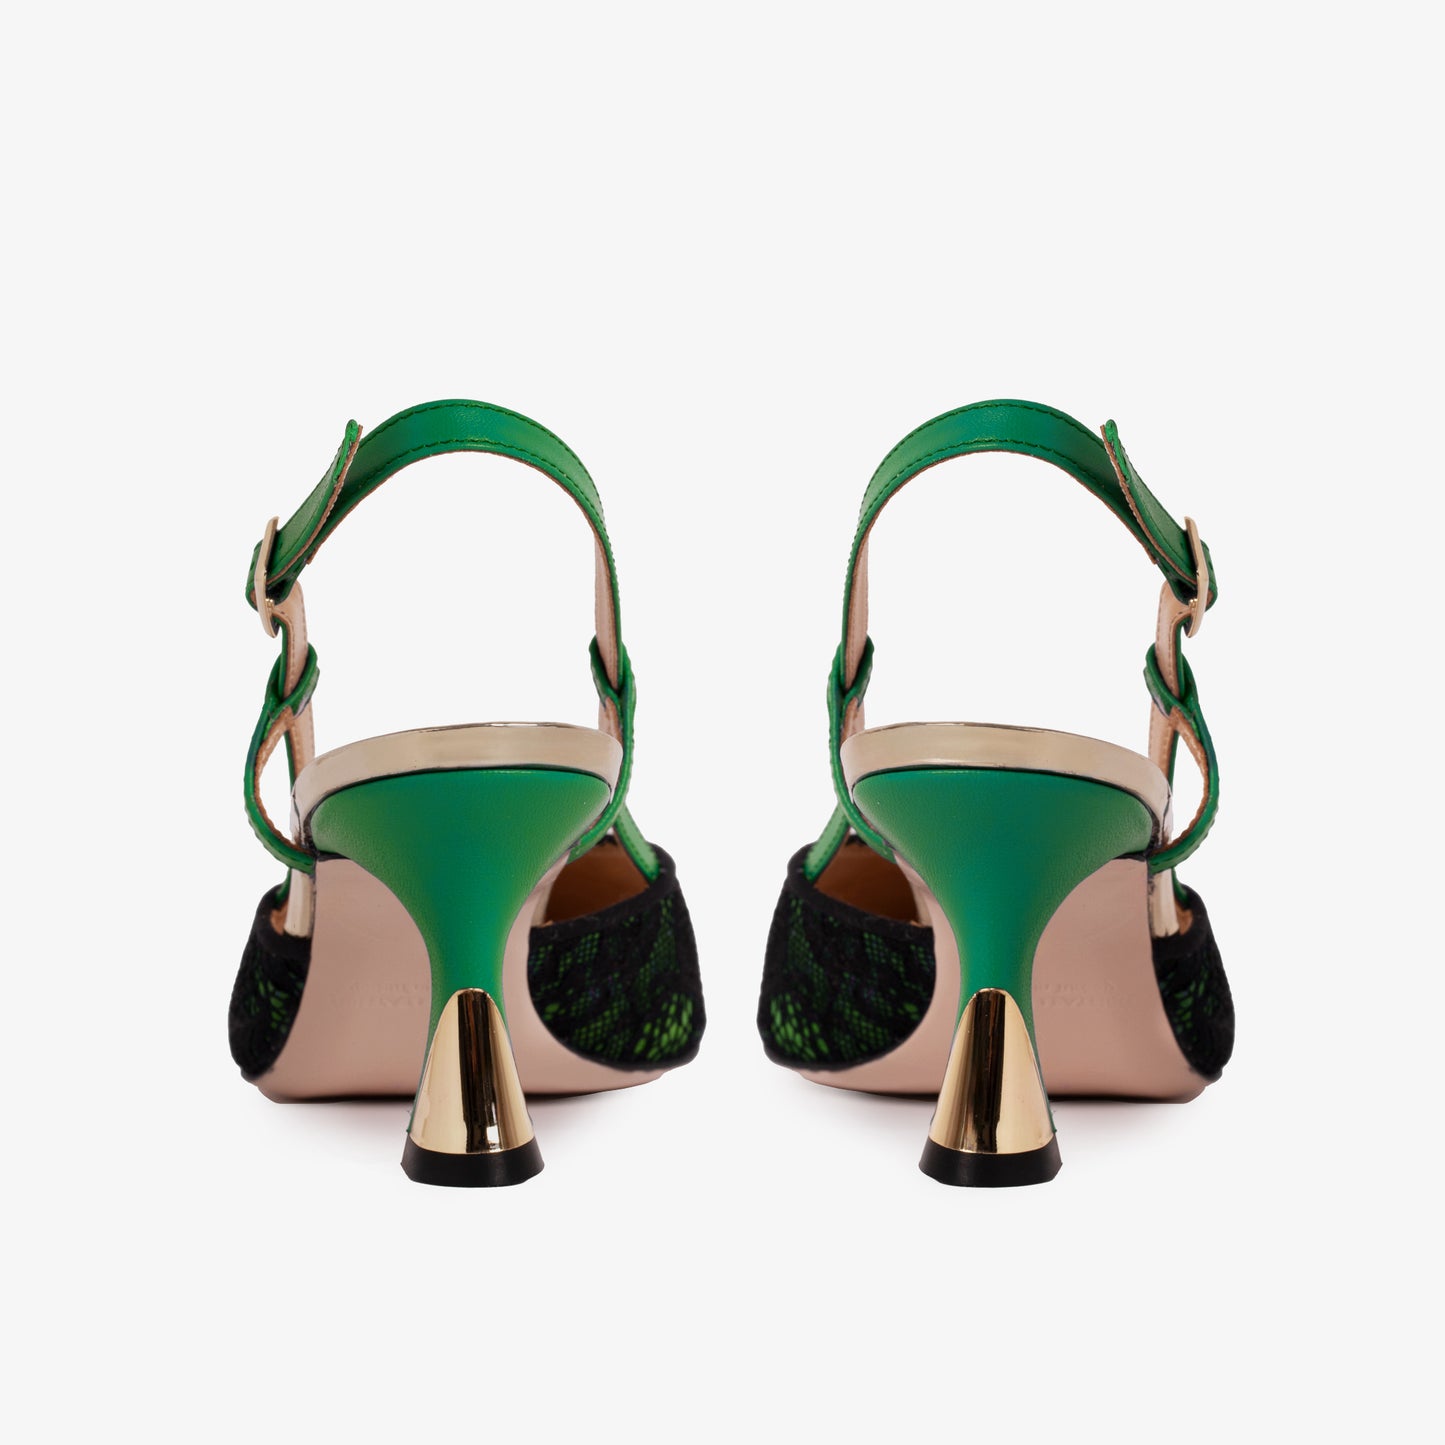 The Bali Green Leather Slingback Women Sandal